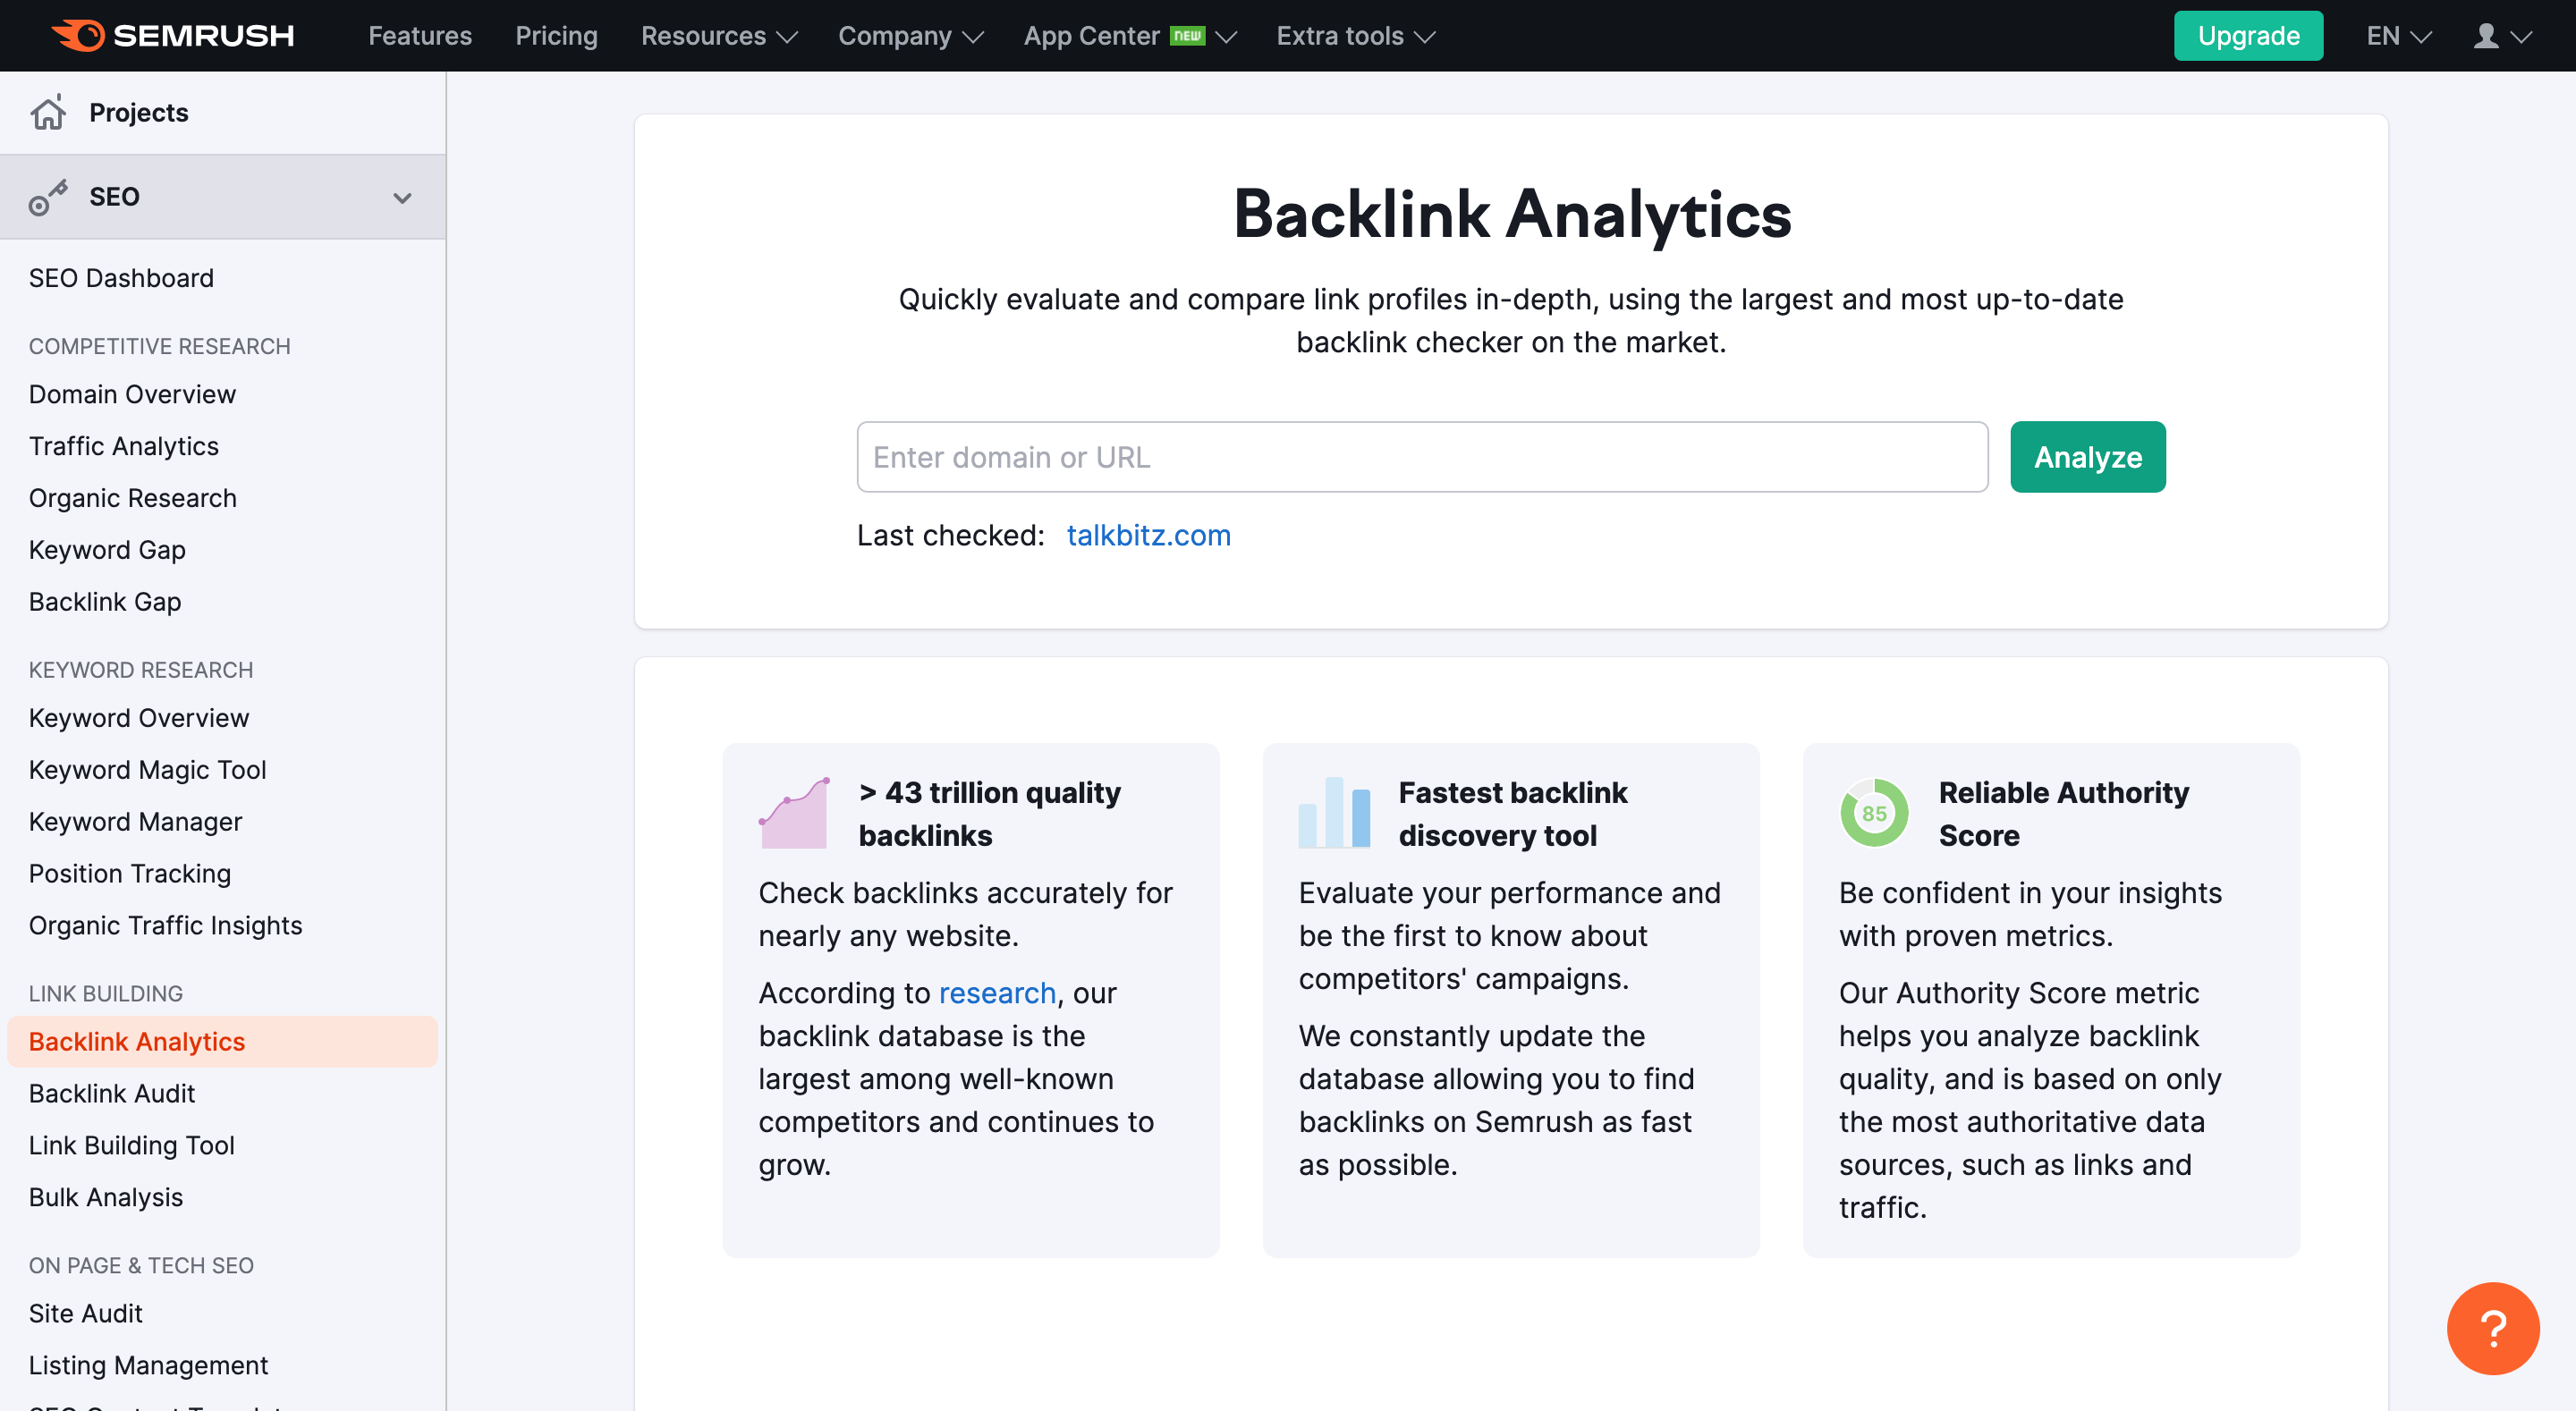 Backlink Analysis tools by Semrush